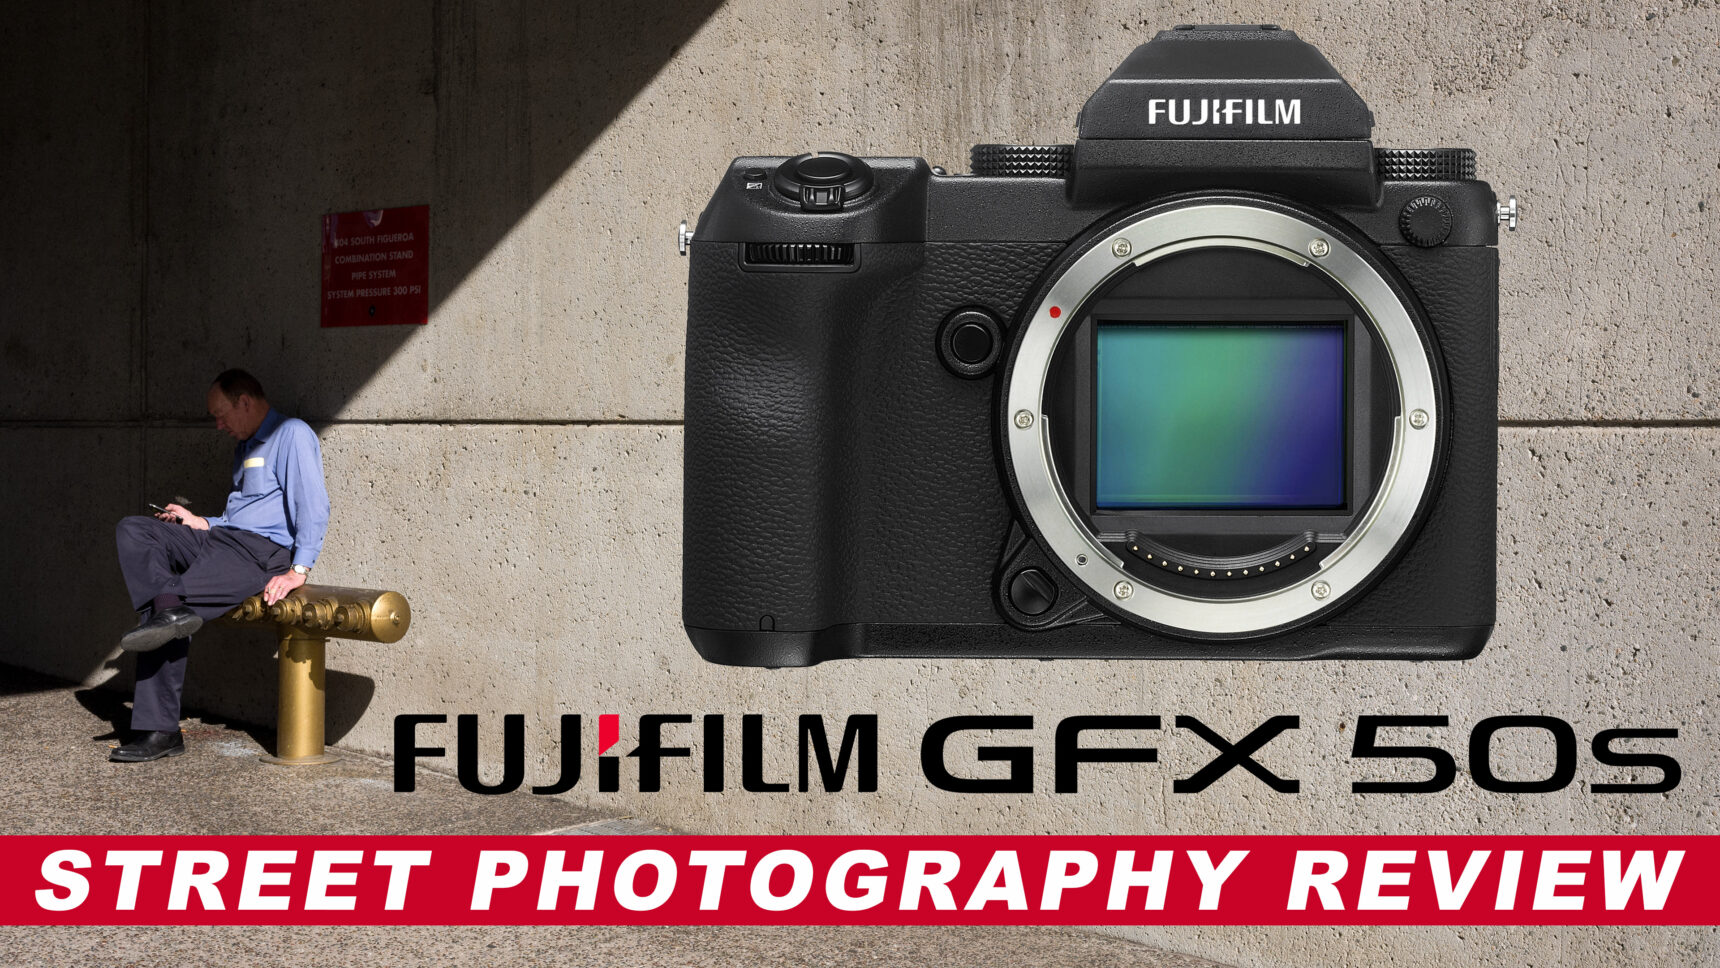 Fuji GFX Street Photography Review